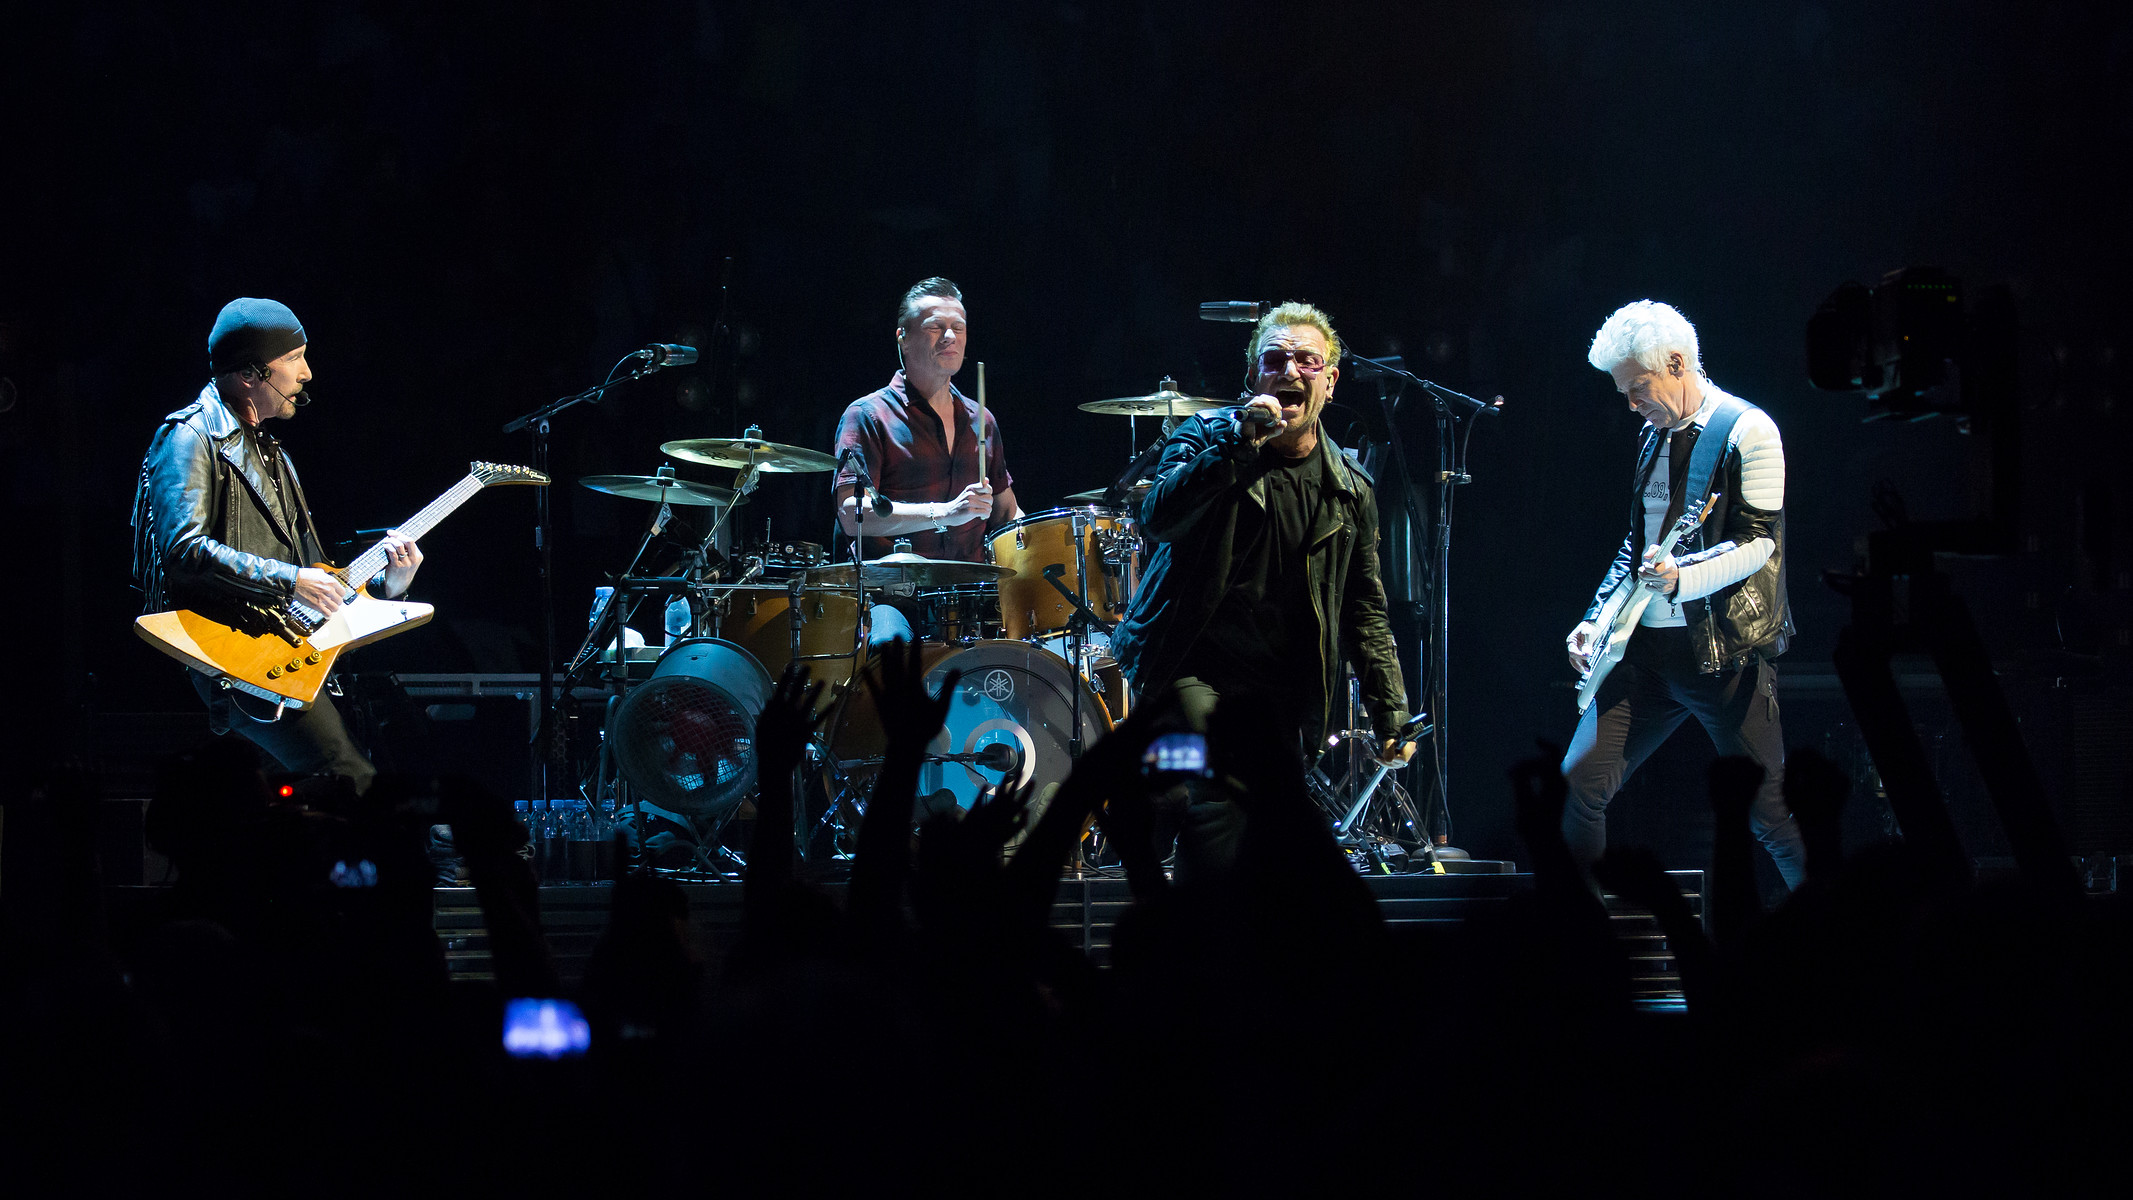 Concert Photography Gallery U2 // Air Canada